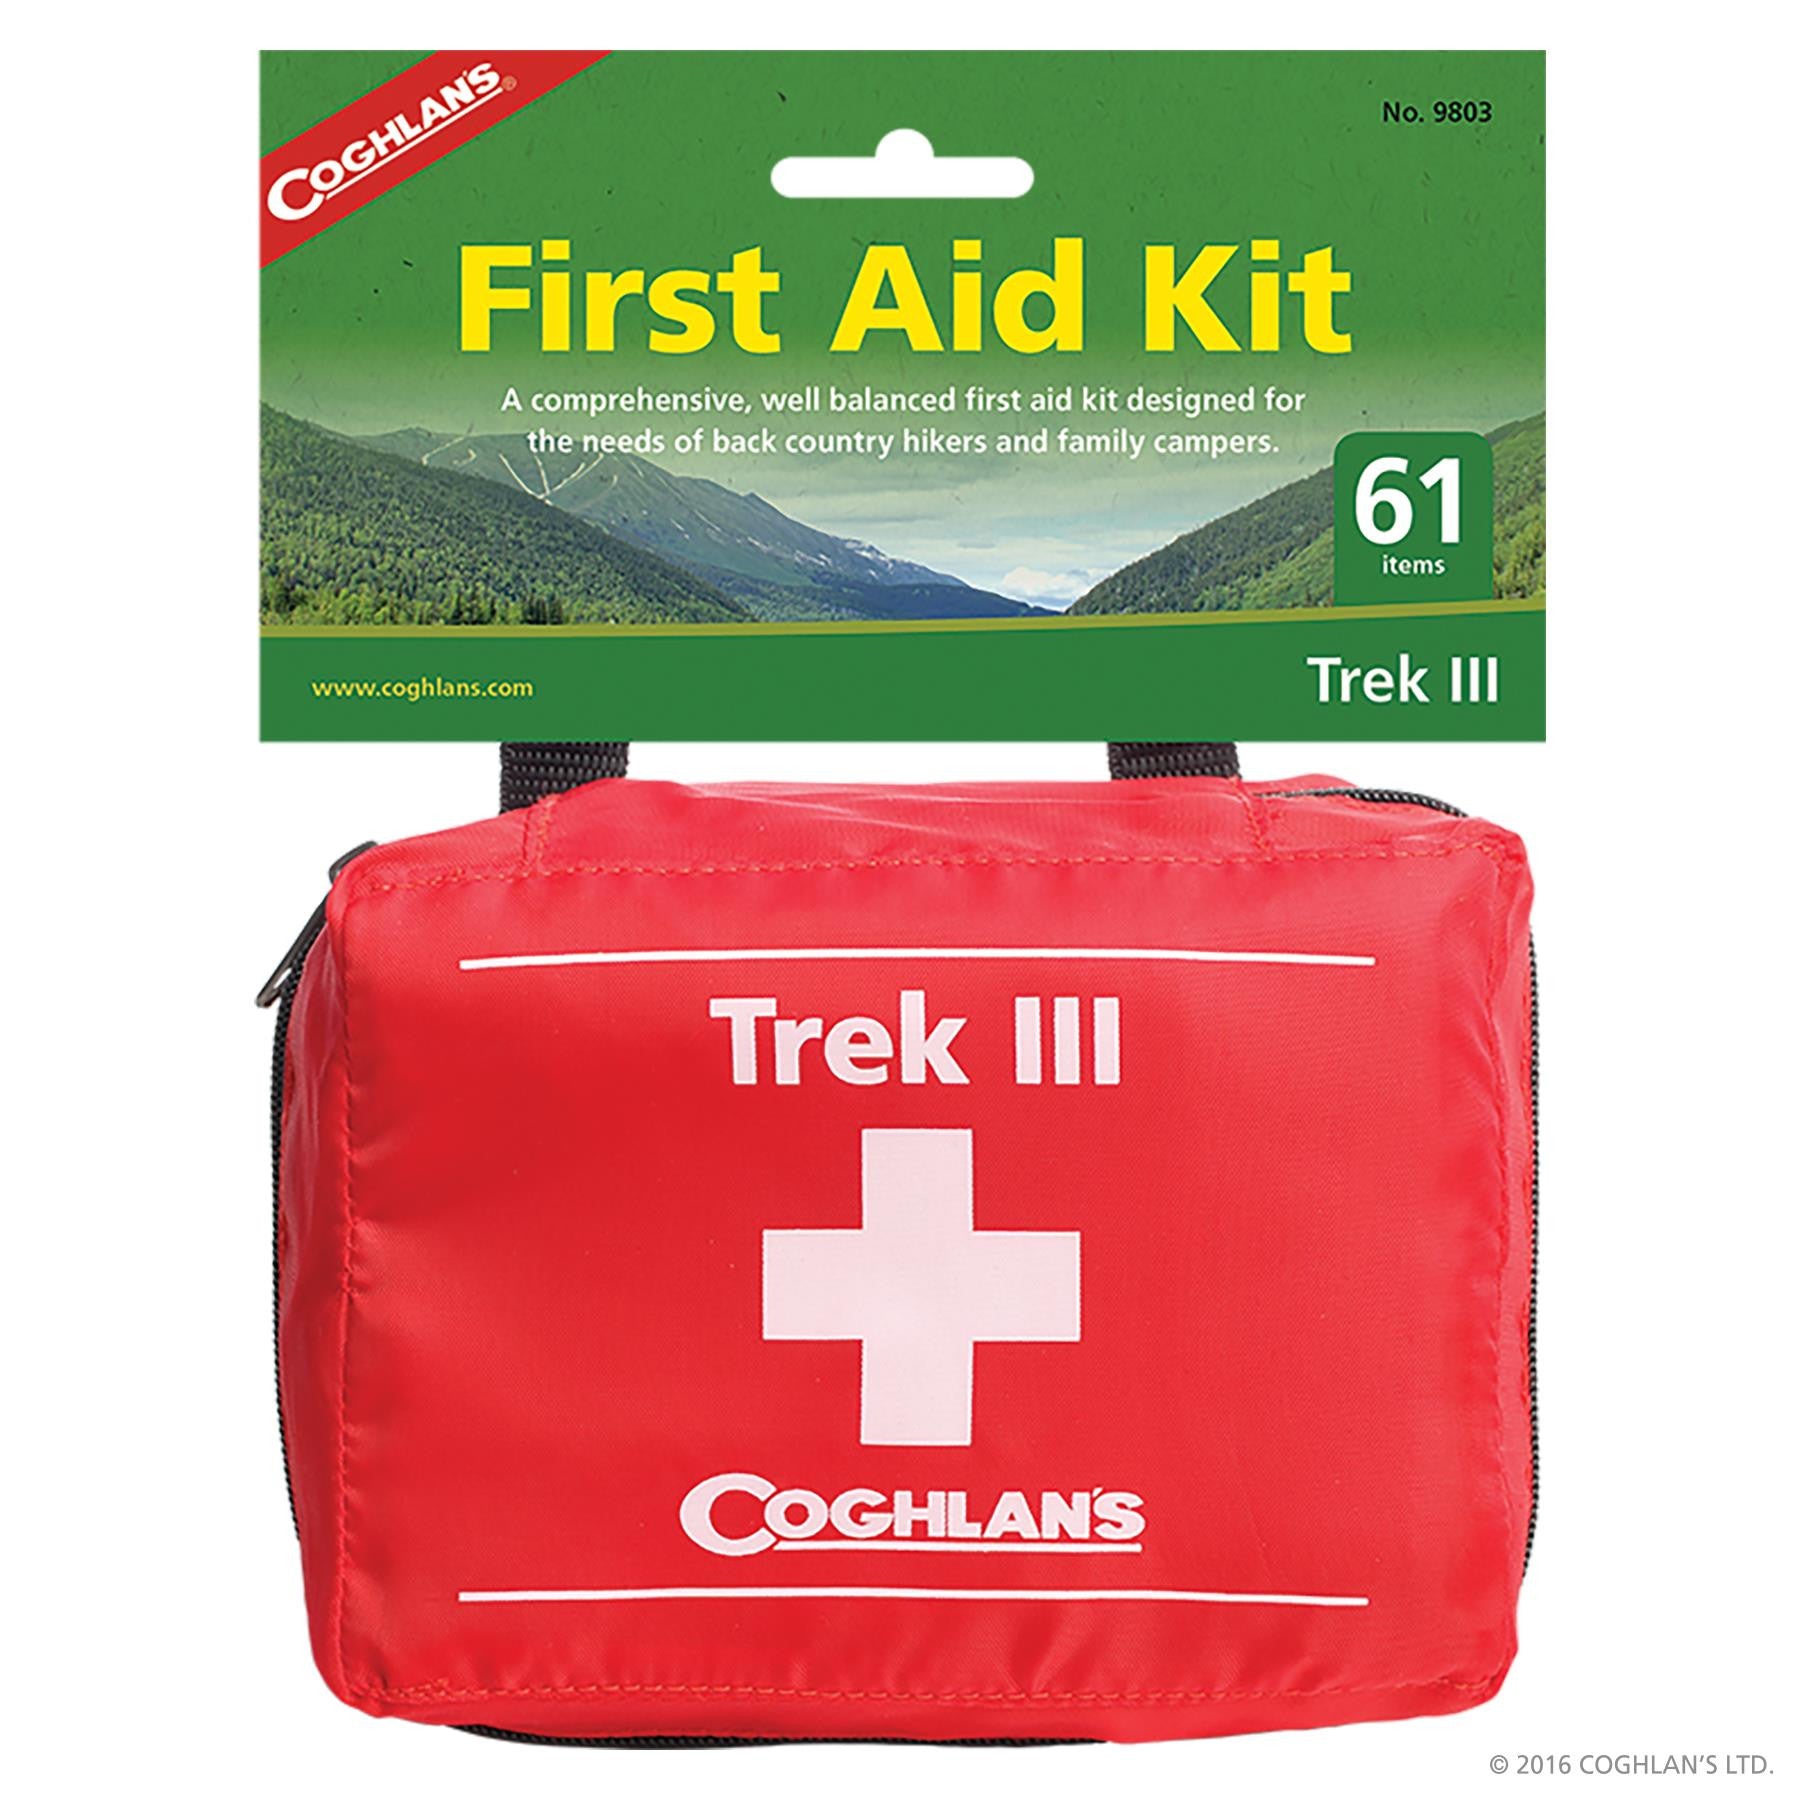 First Aid Kit Trek III